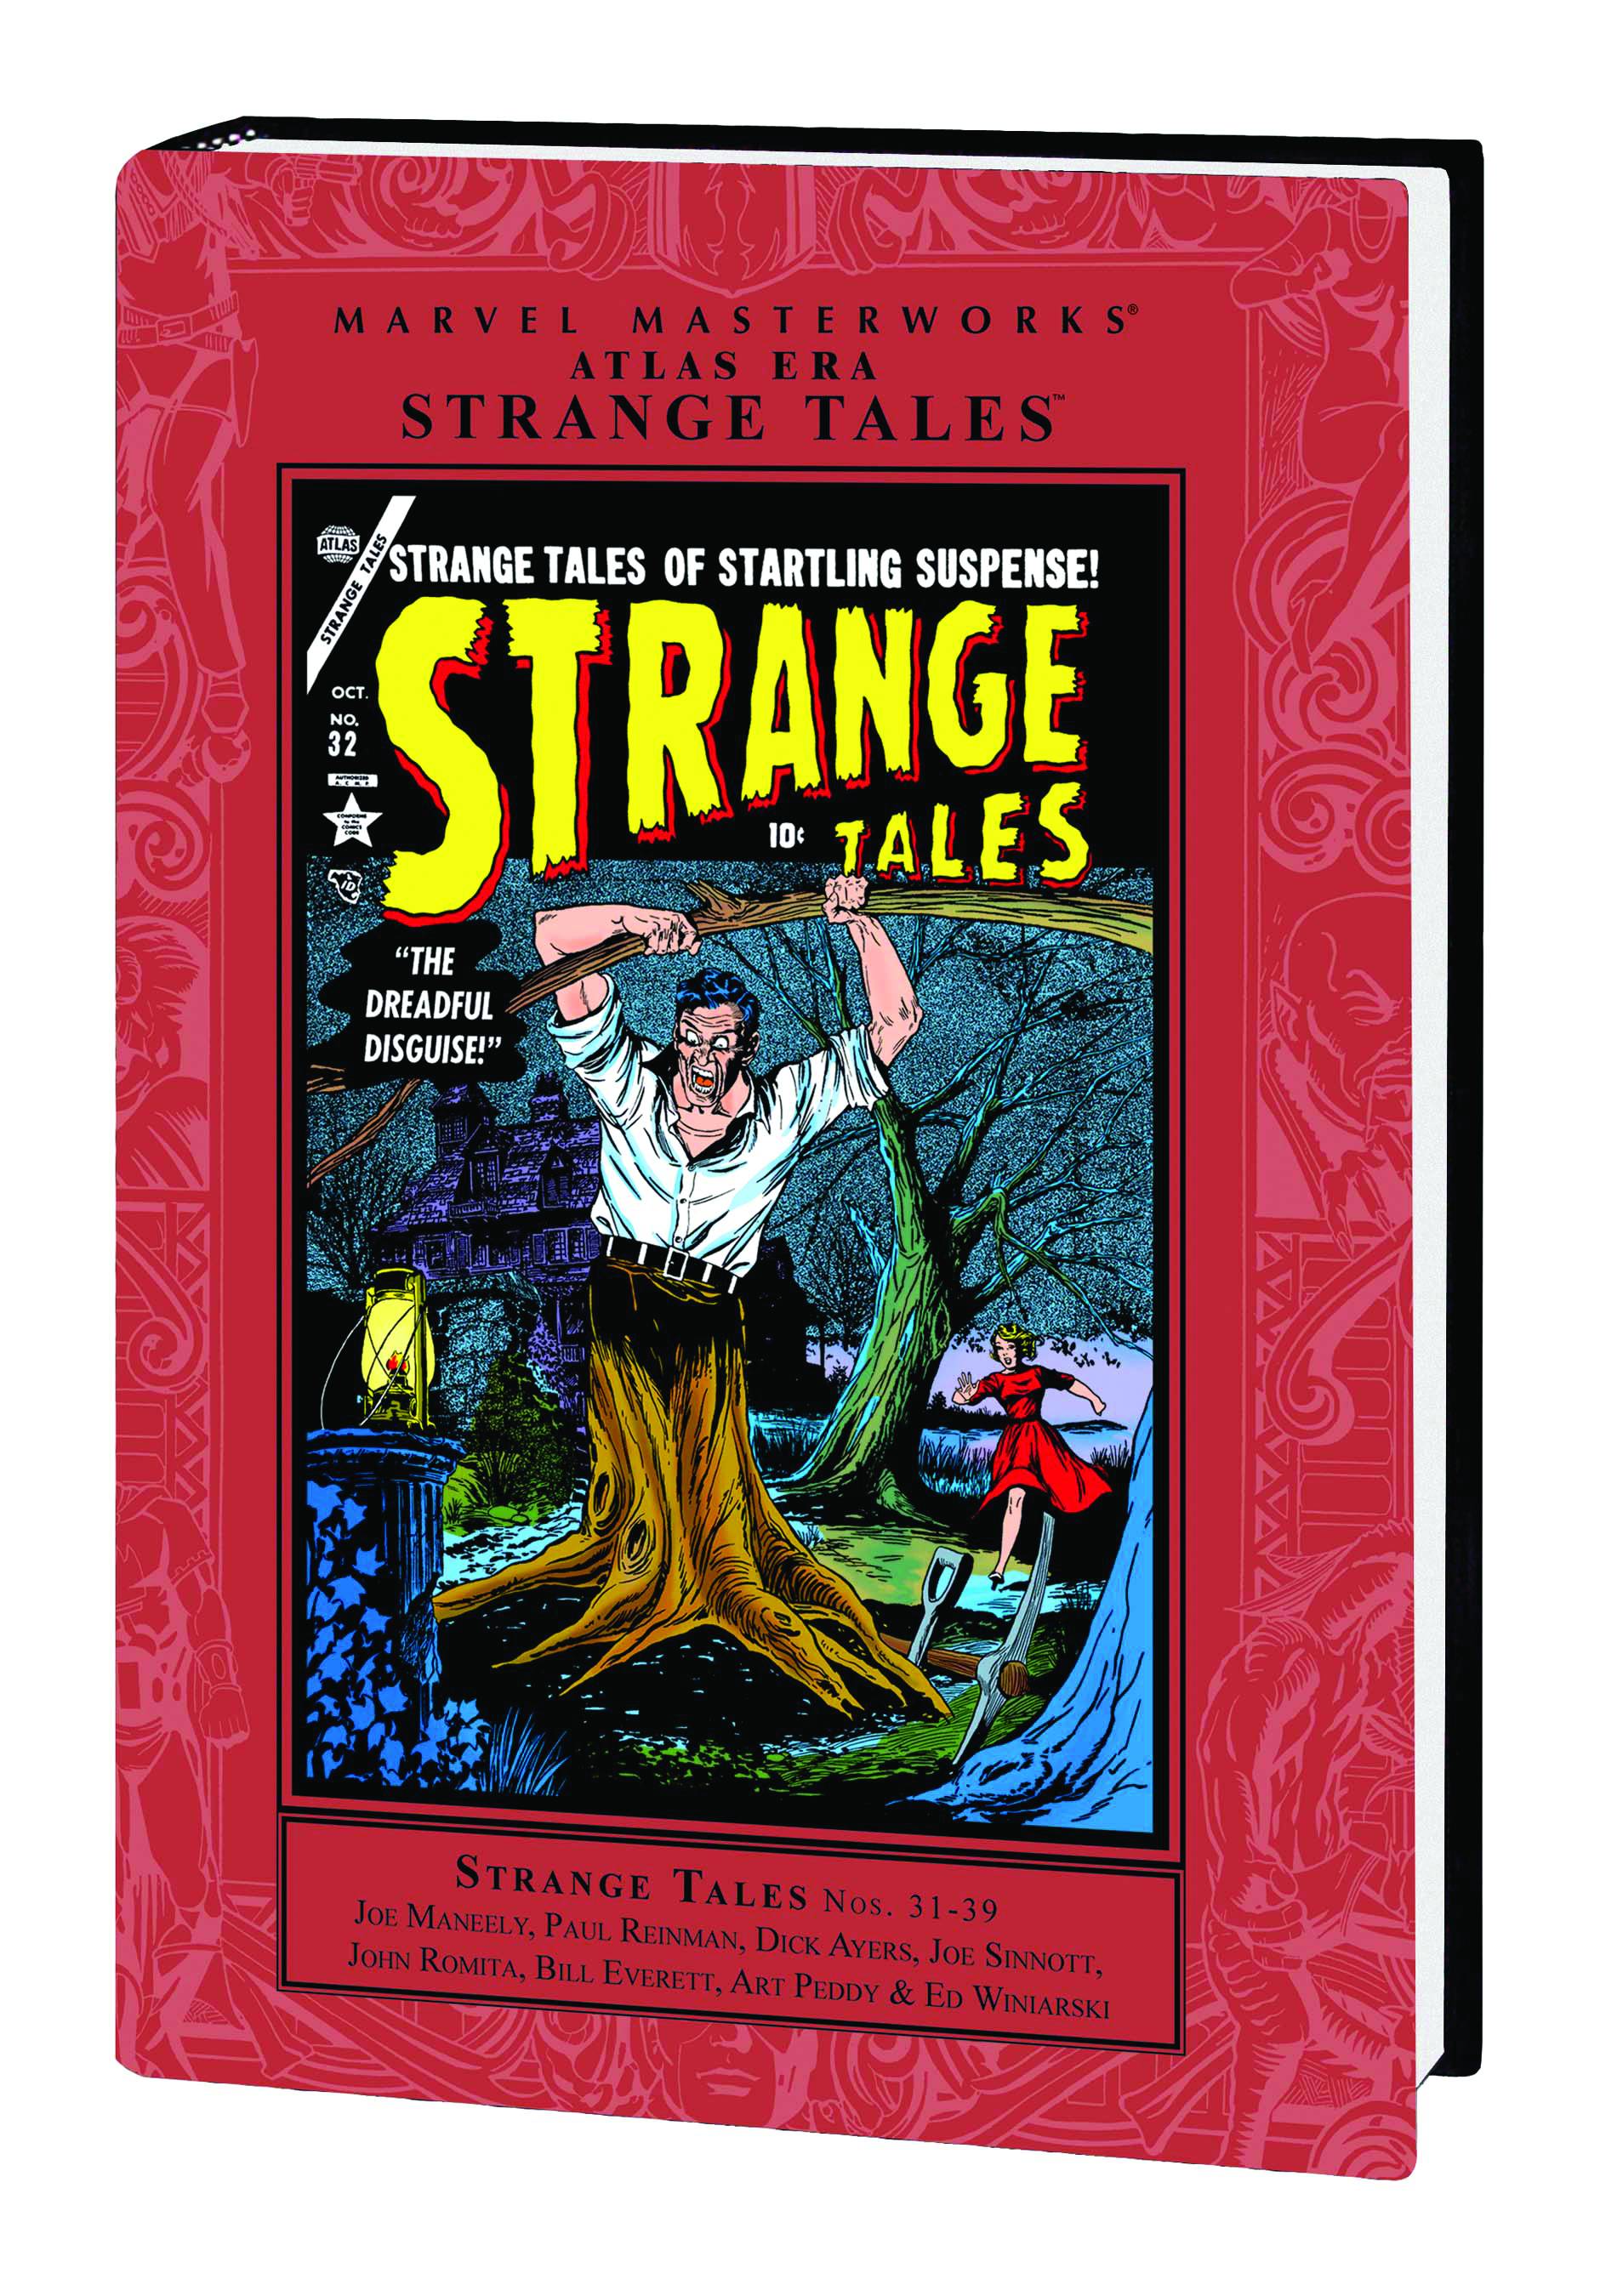 Marvel Masterworks Atlas Era Strange Tales Hardcover Volume 4